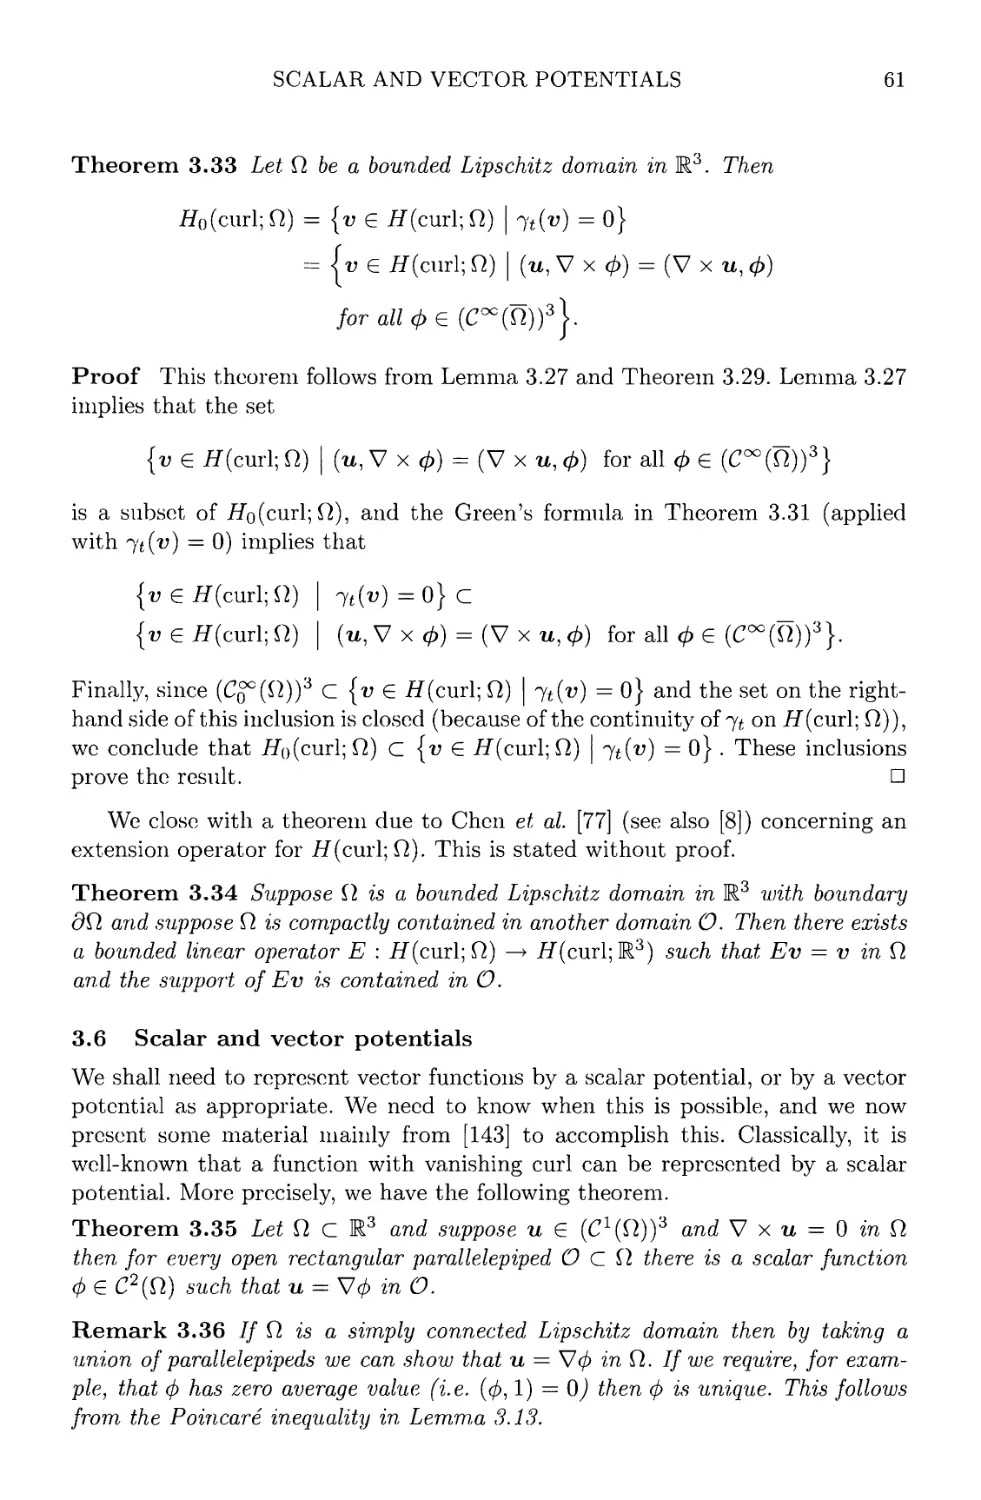 3.6 Scalar and vector potentials